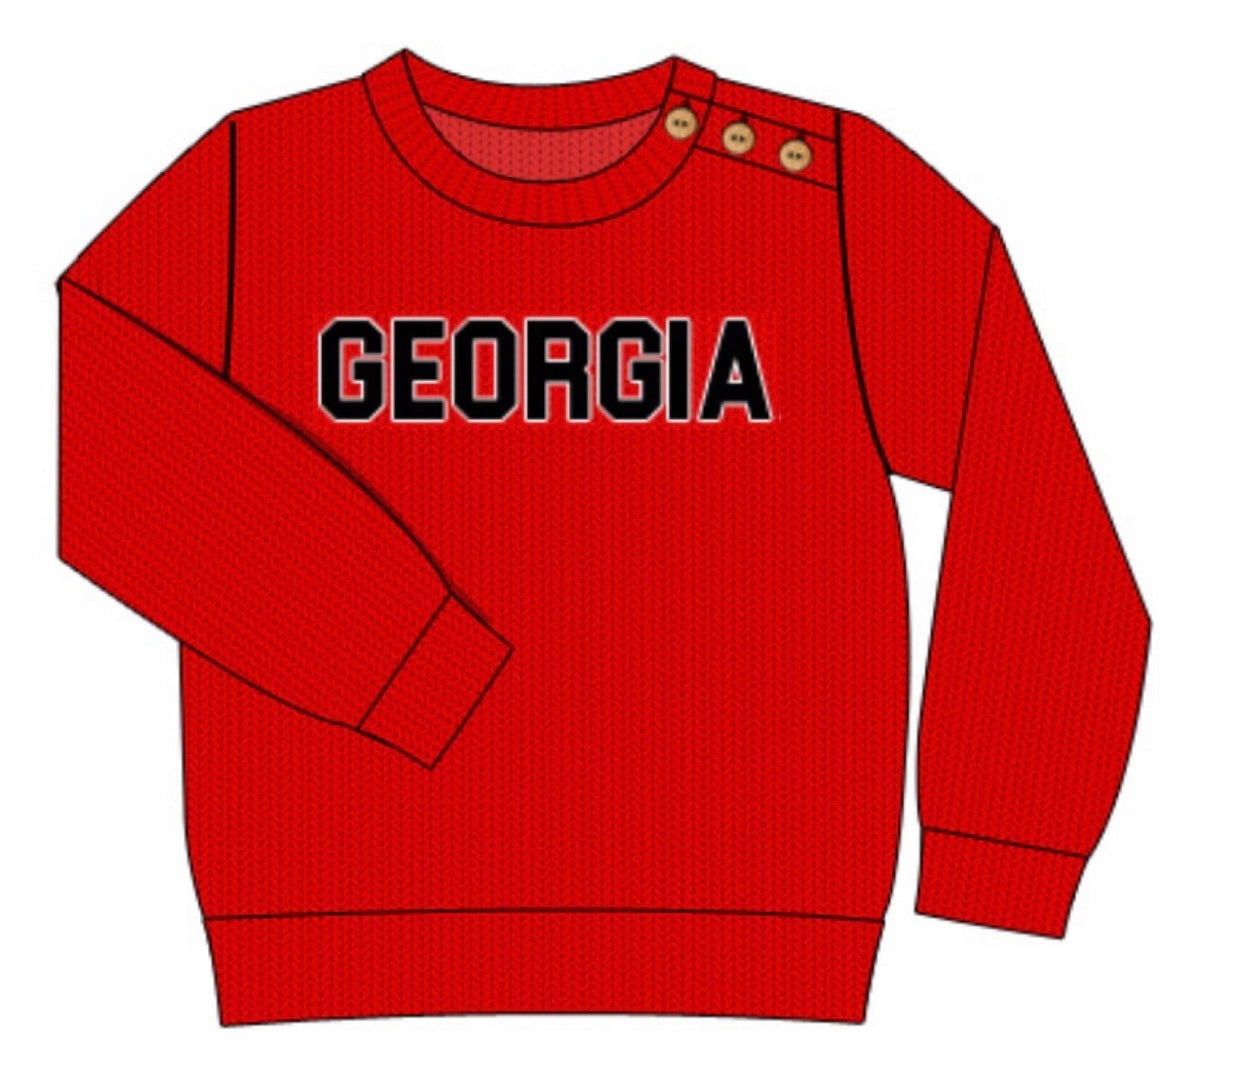 Georgia Adult Sweater